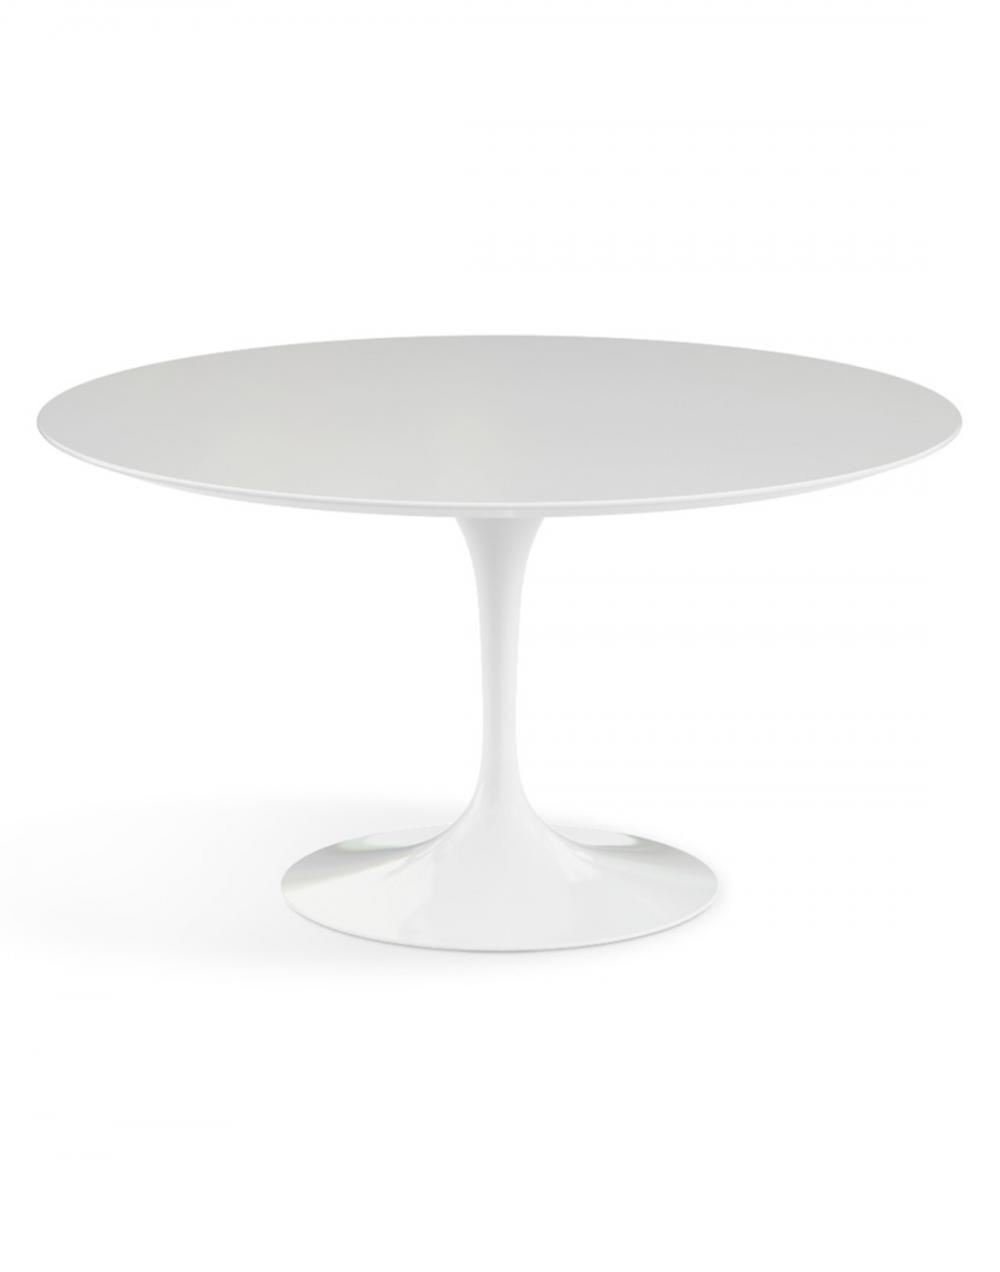 Saarinen Dining Table Round Extra Large White Base Laminated White Top